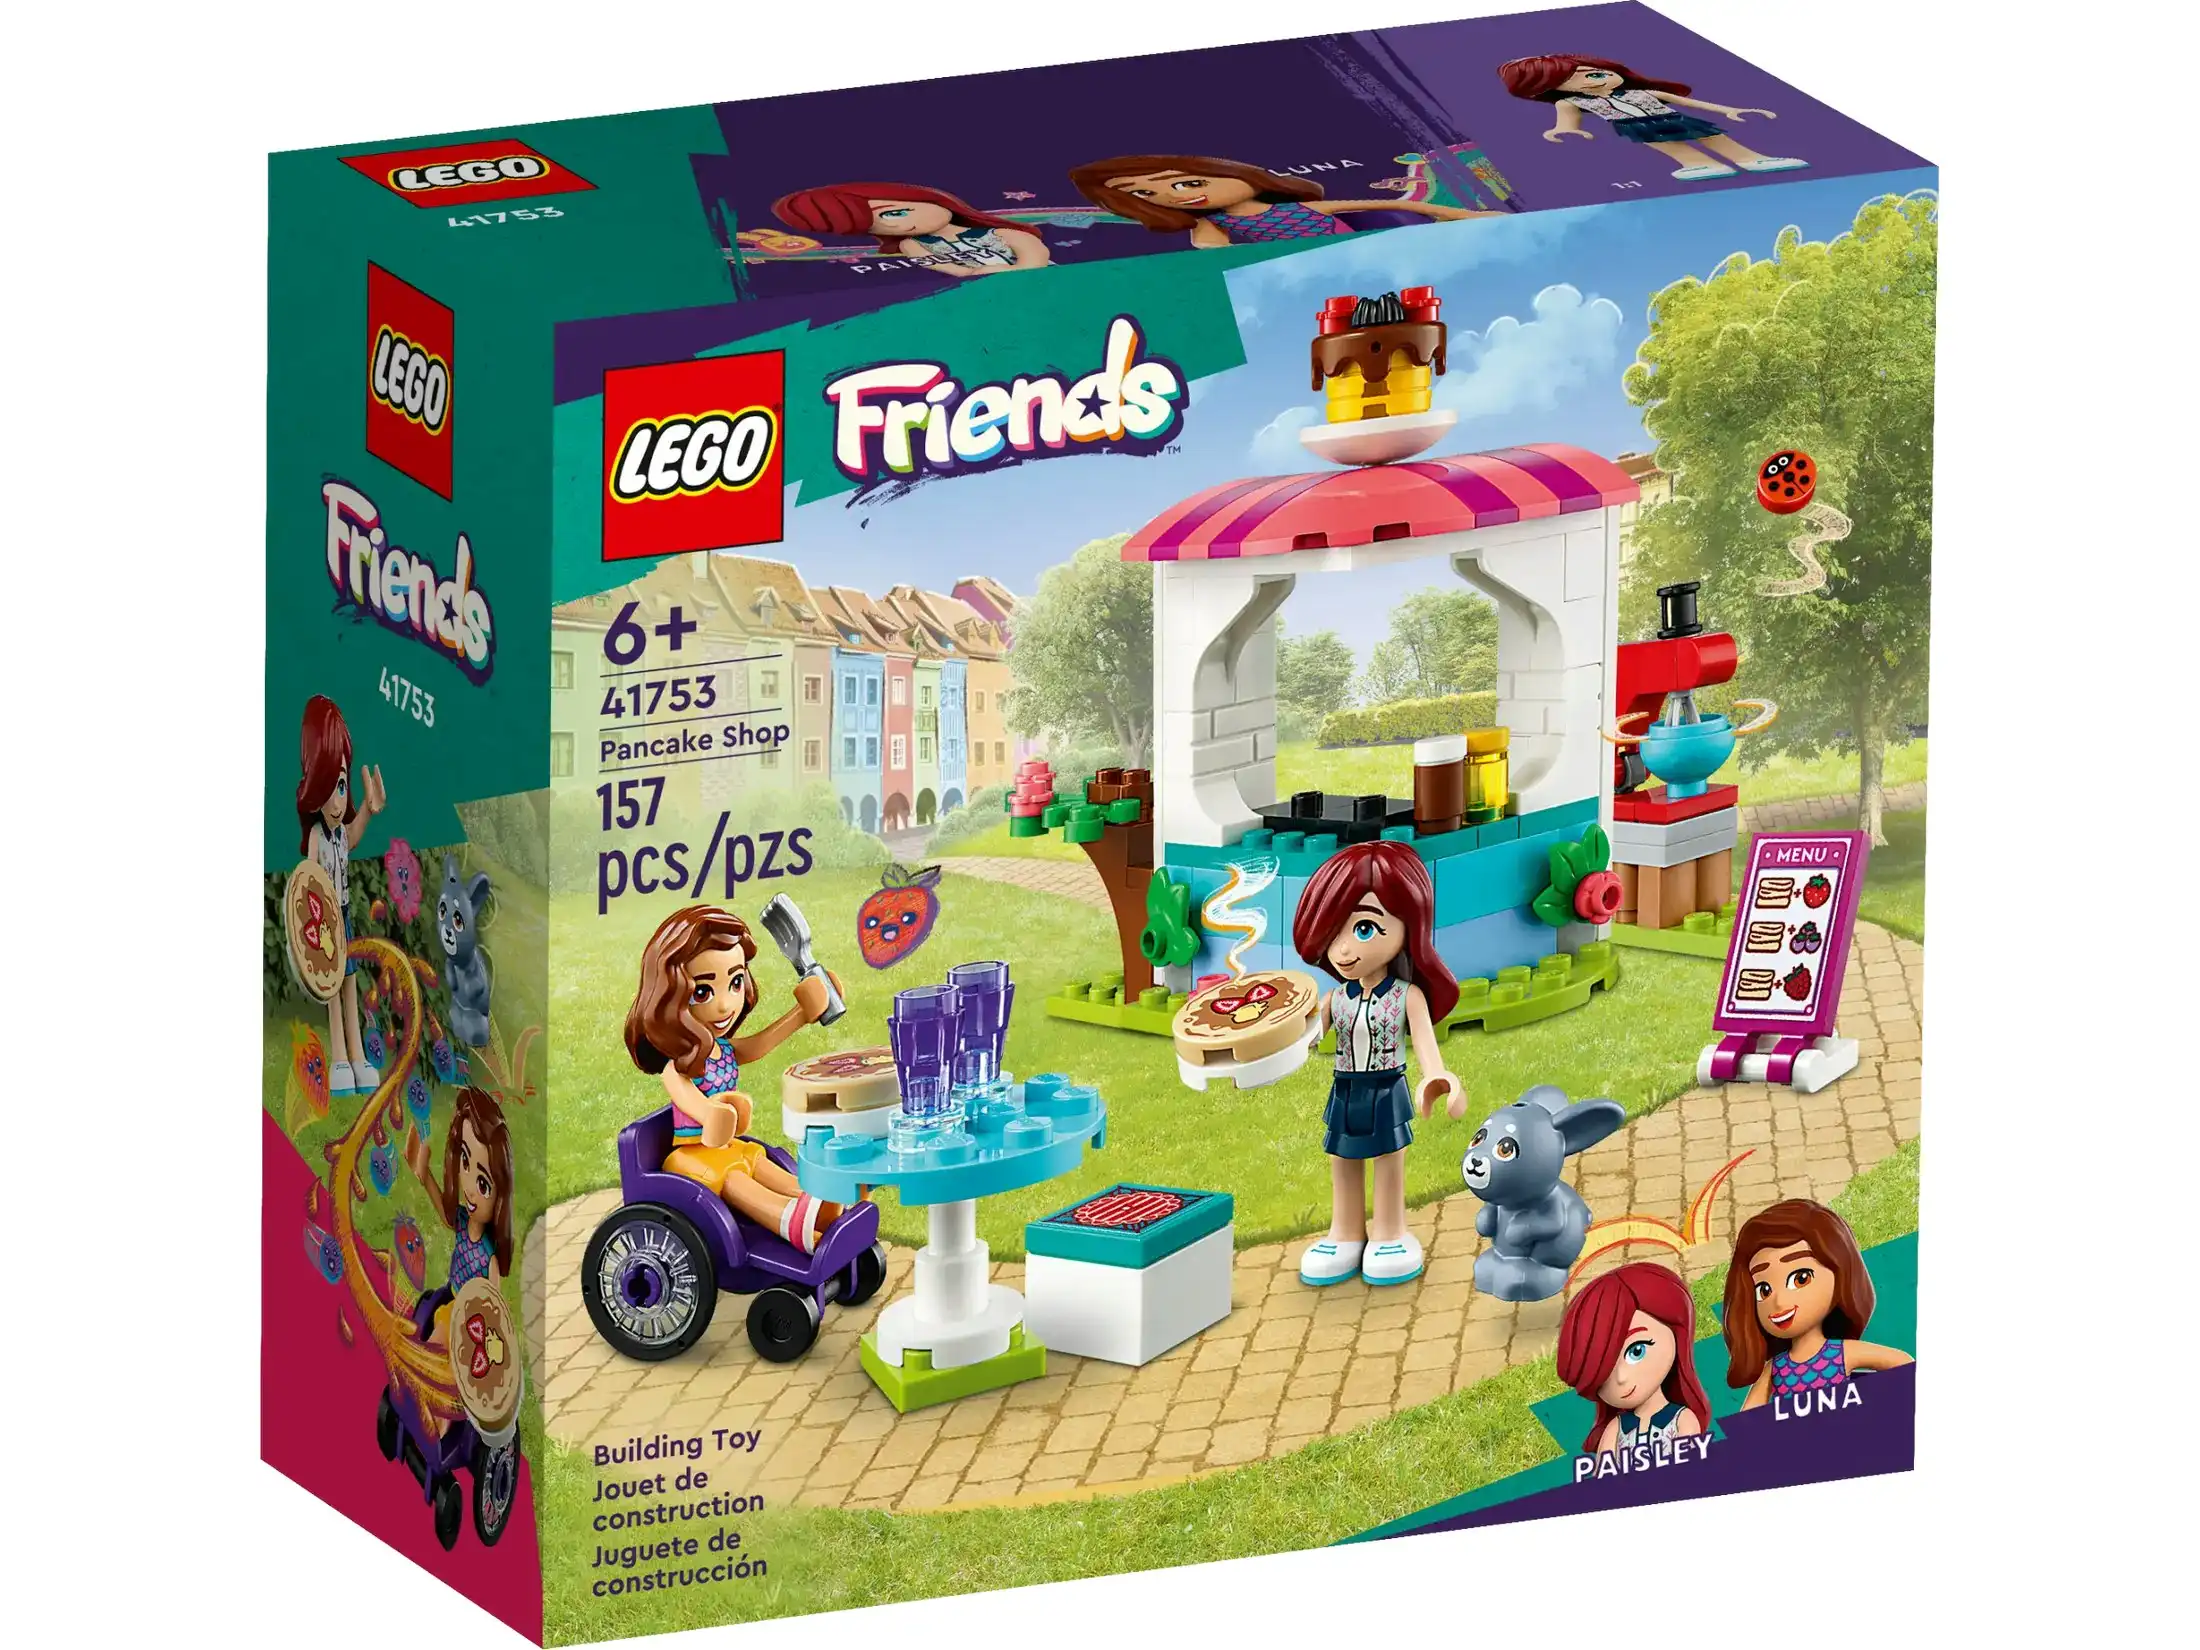 LEGO 41753 Pancake Shop - Friends